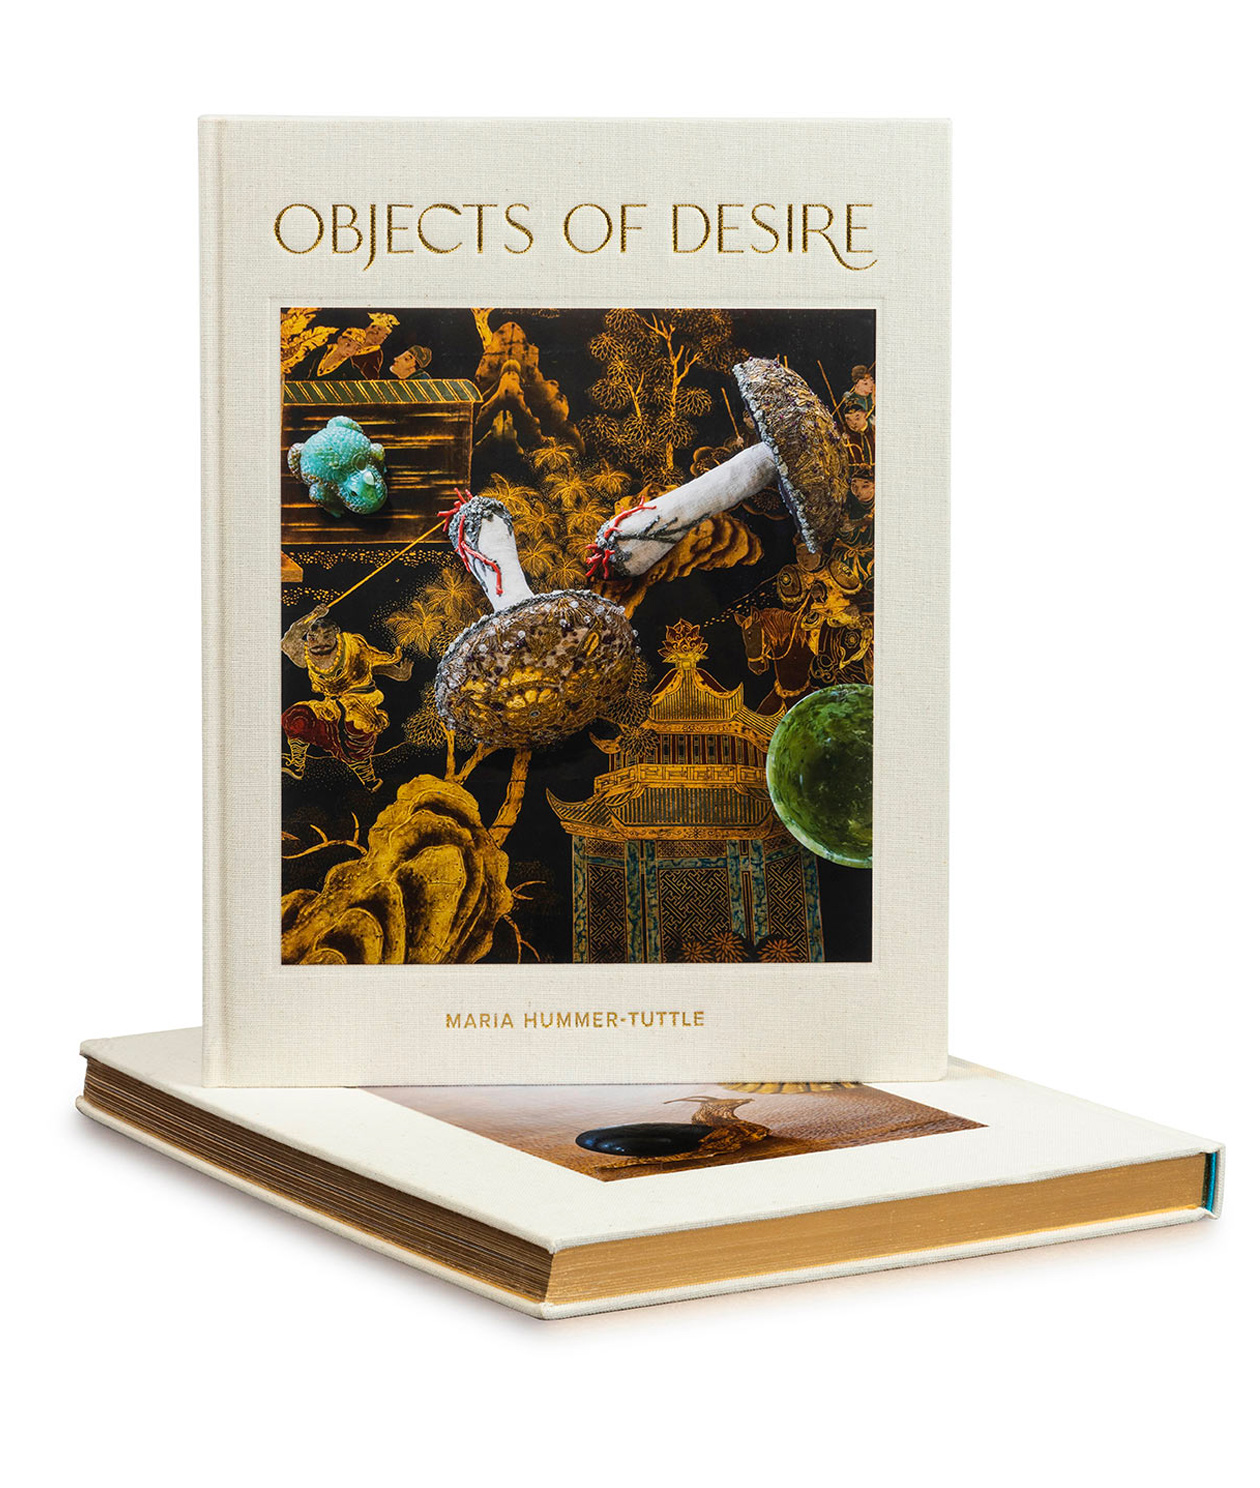 Objects of desire